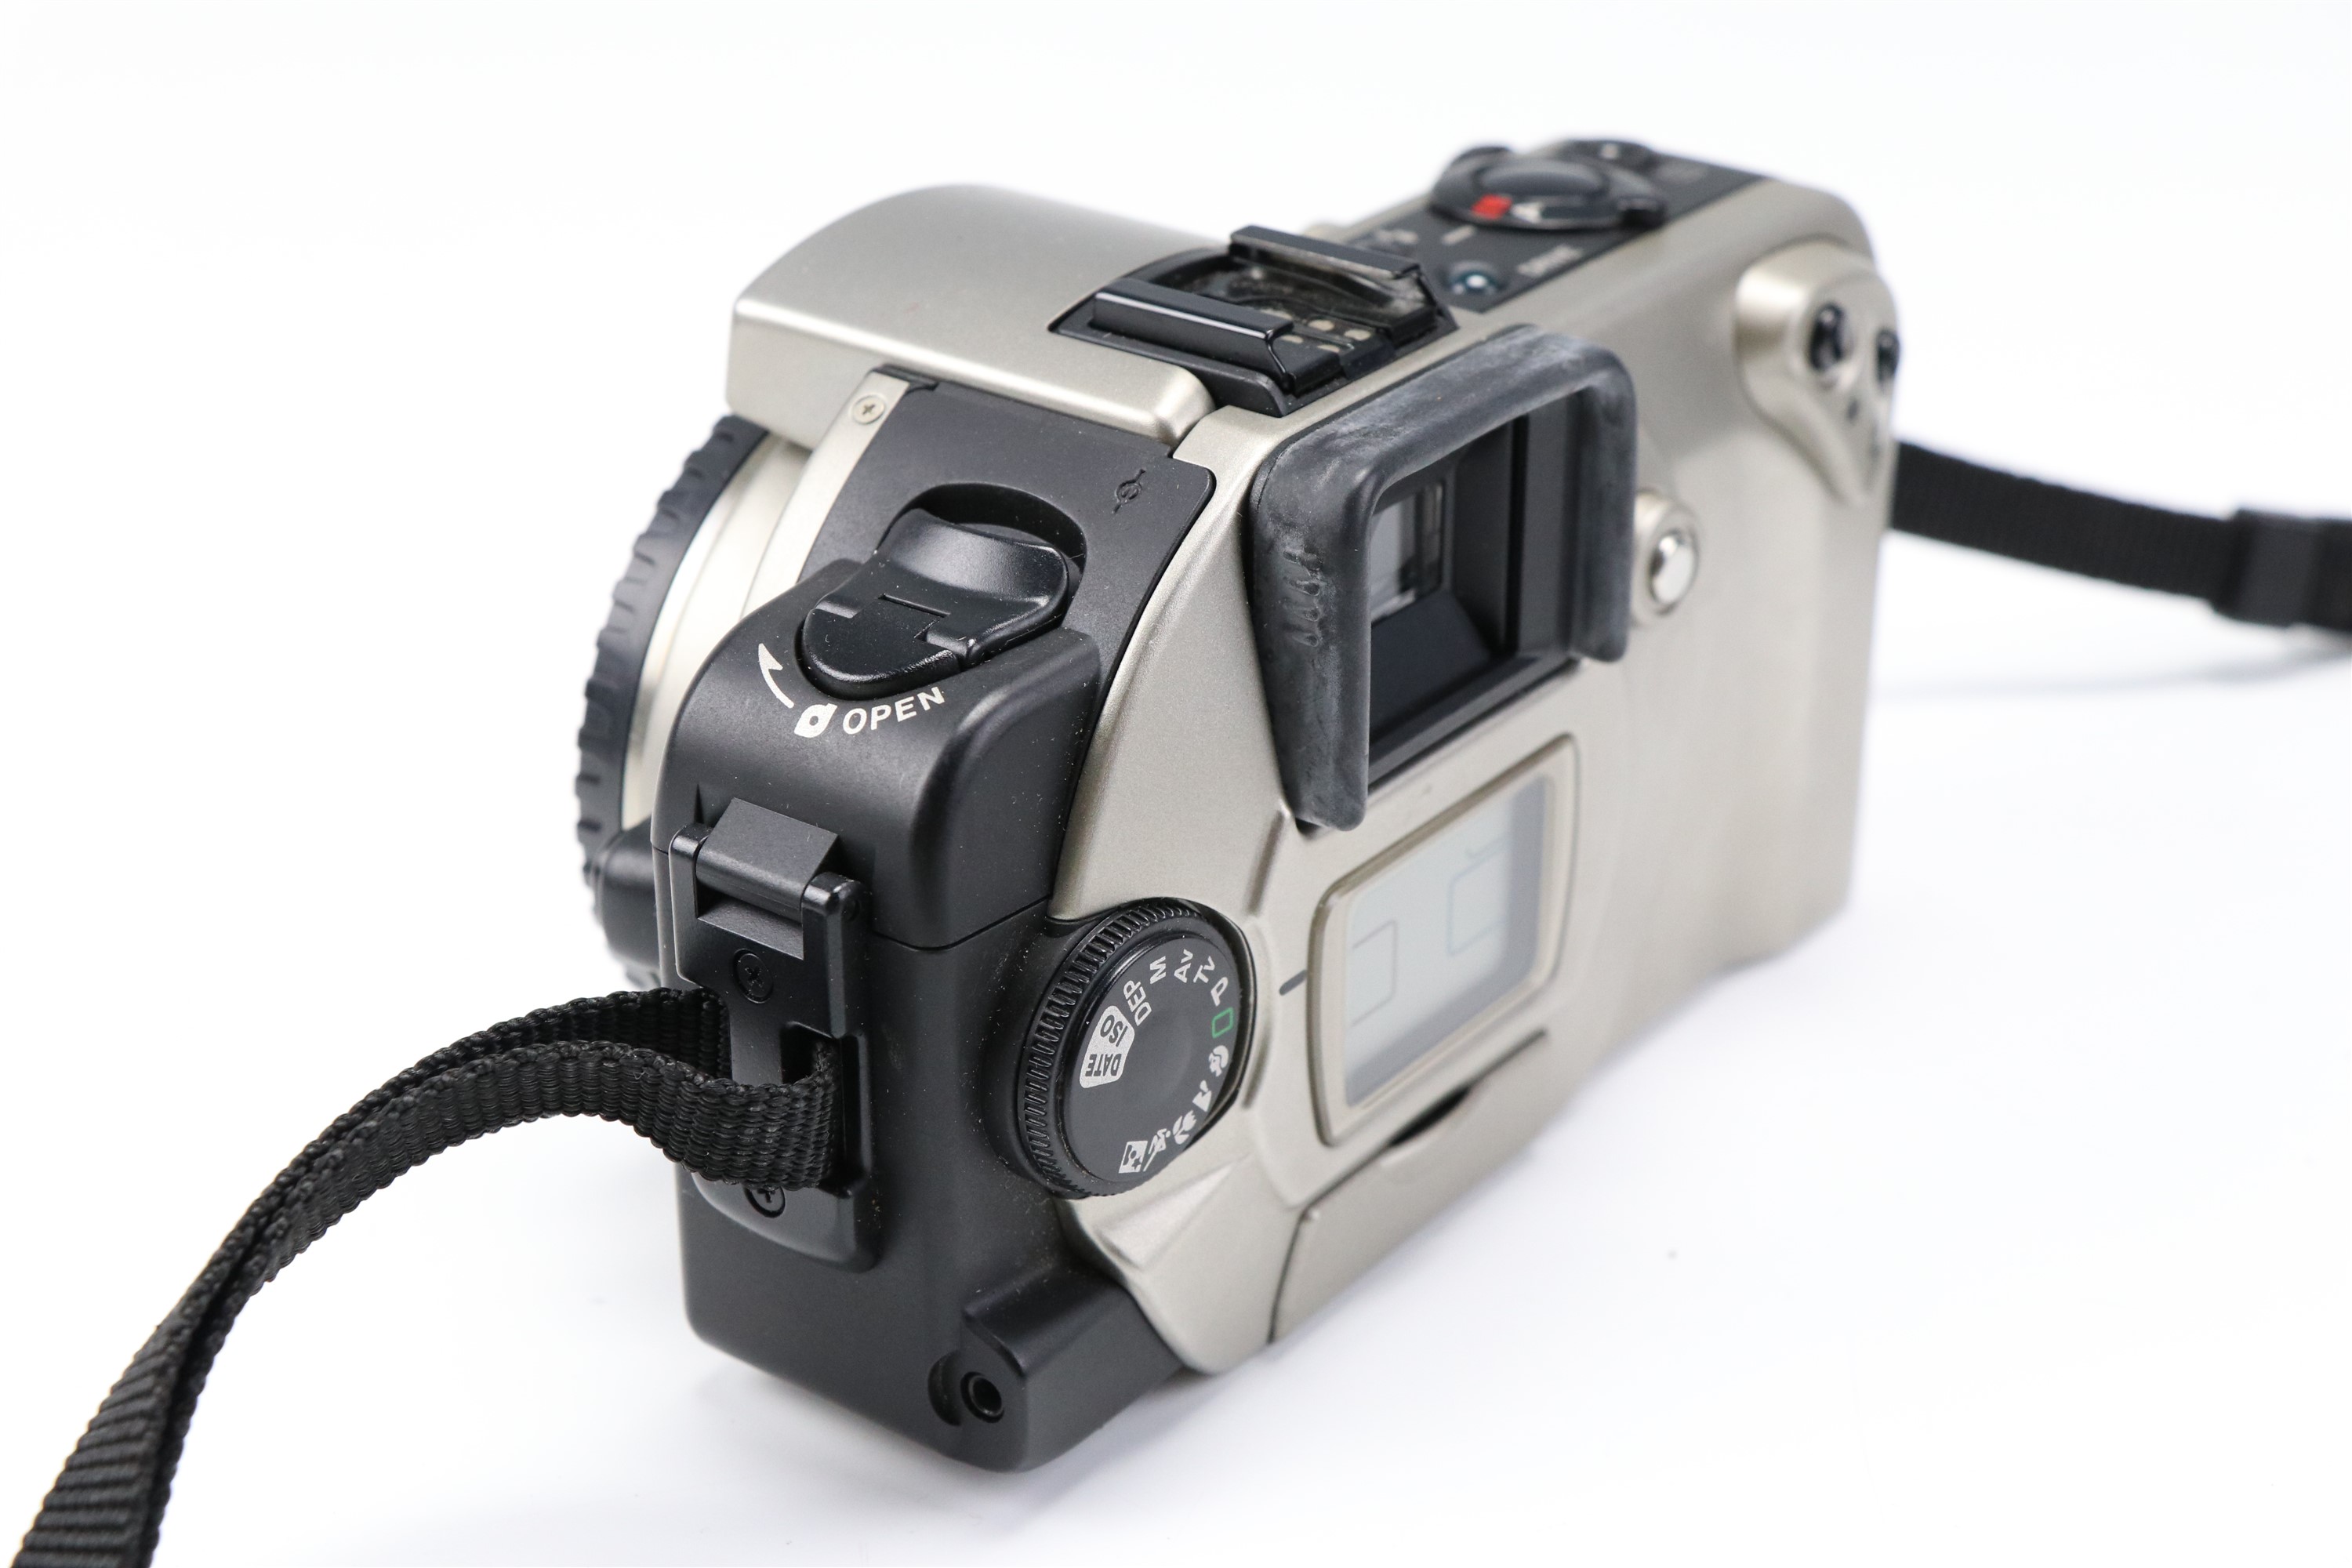 Lumix F238 HD, Canon EOS IX, Canon Digital IXUS 430, Konica Minolta Dimage 25 and Konica C35 EFP - Image 5 of 24